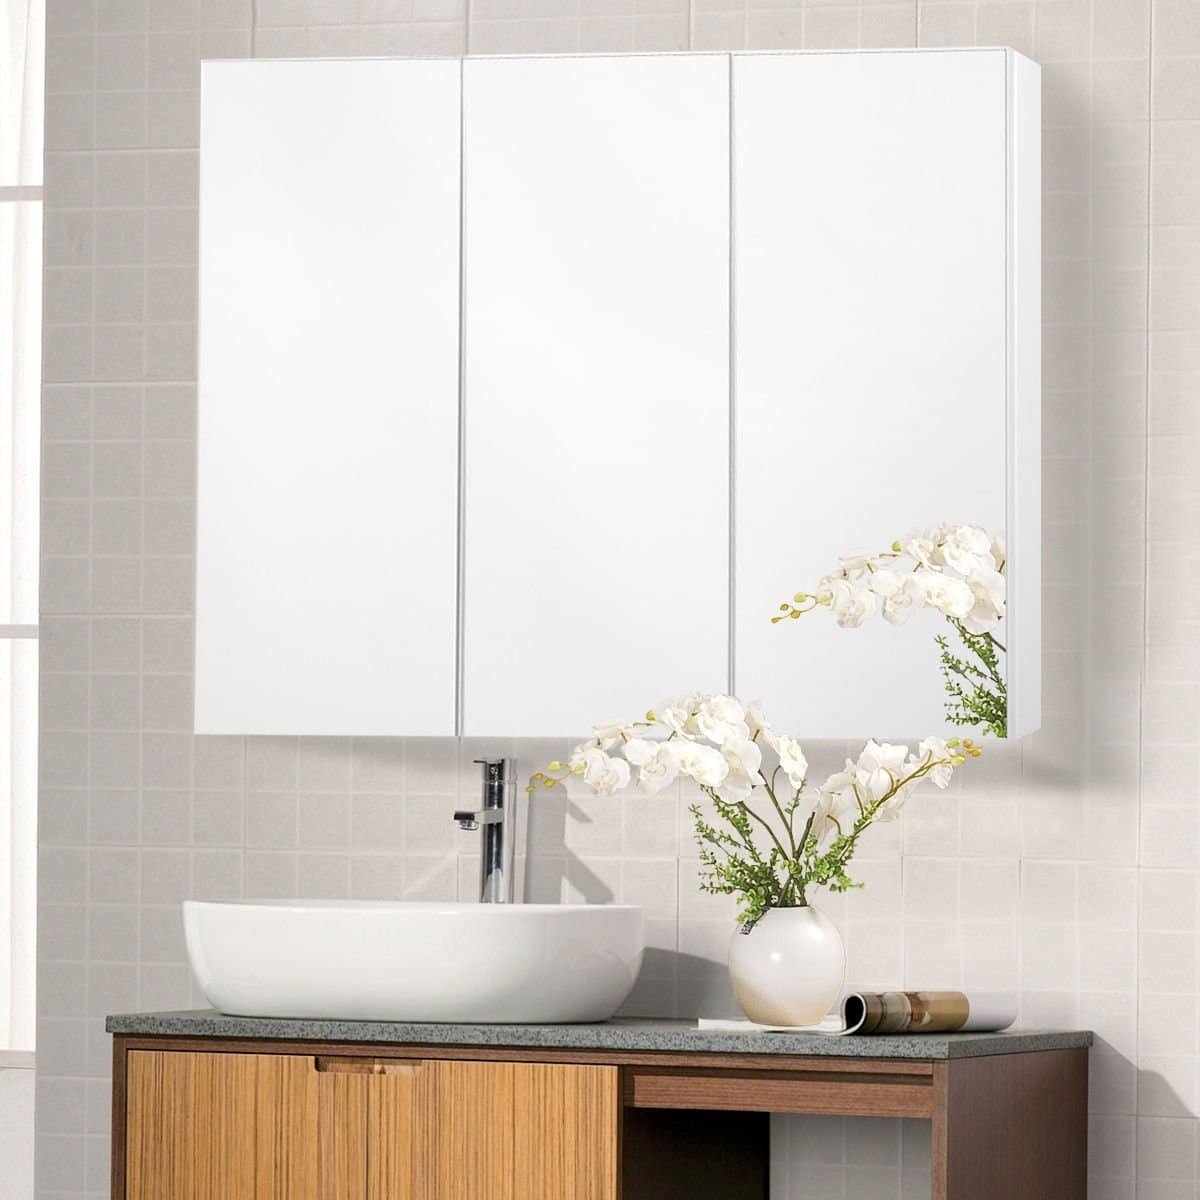 Mirrored Bathroom Cabinets
 Top 10 Best Mirror Medicine Cabinets in 2019